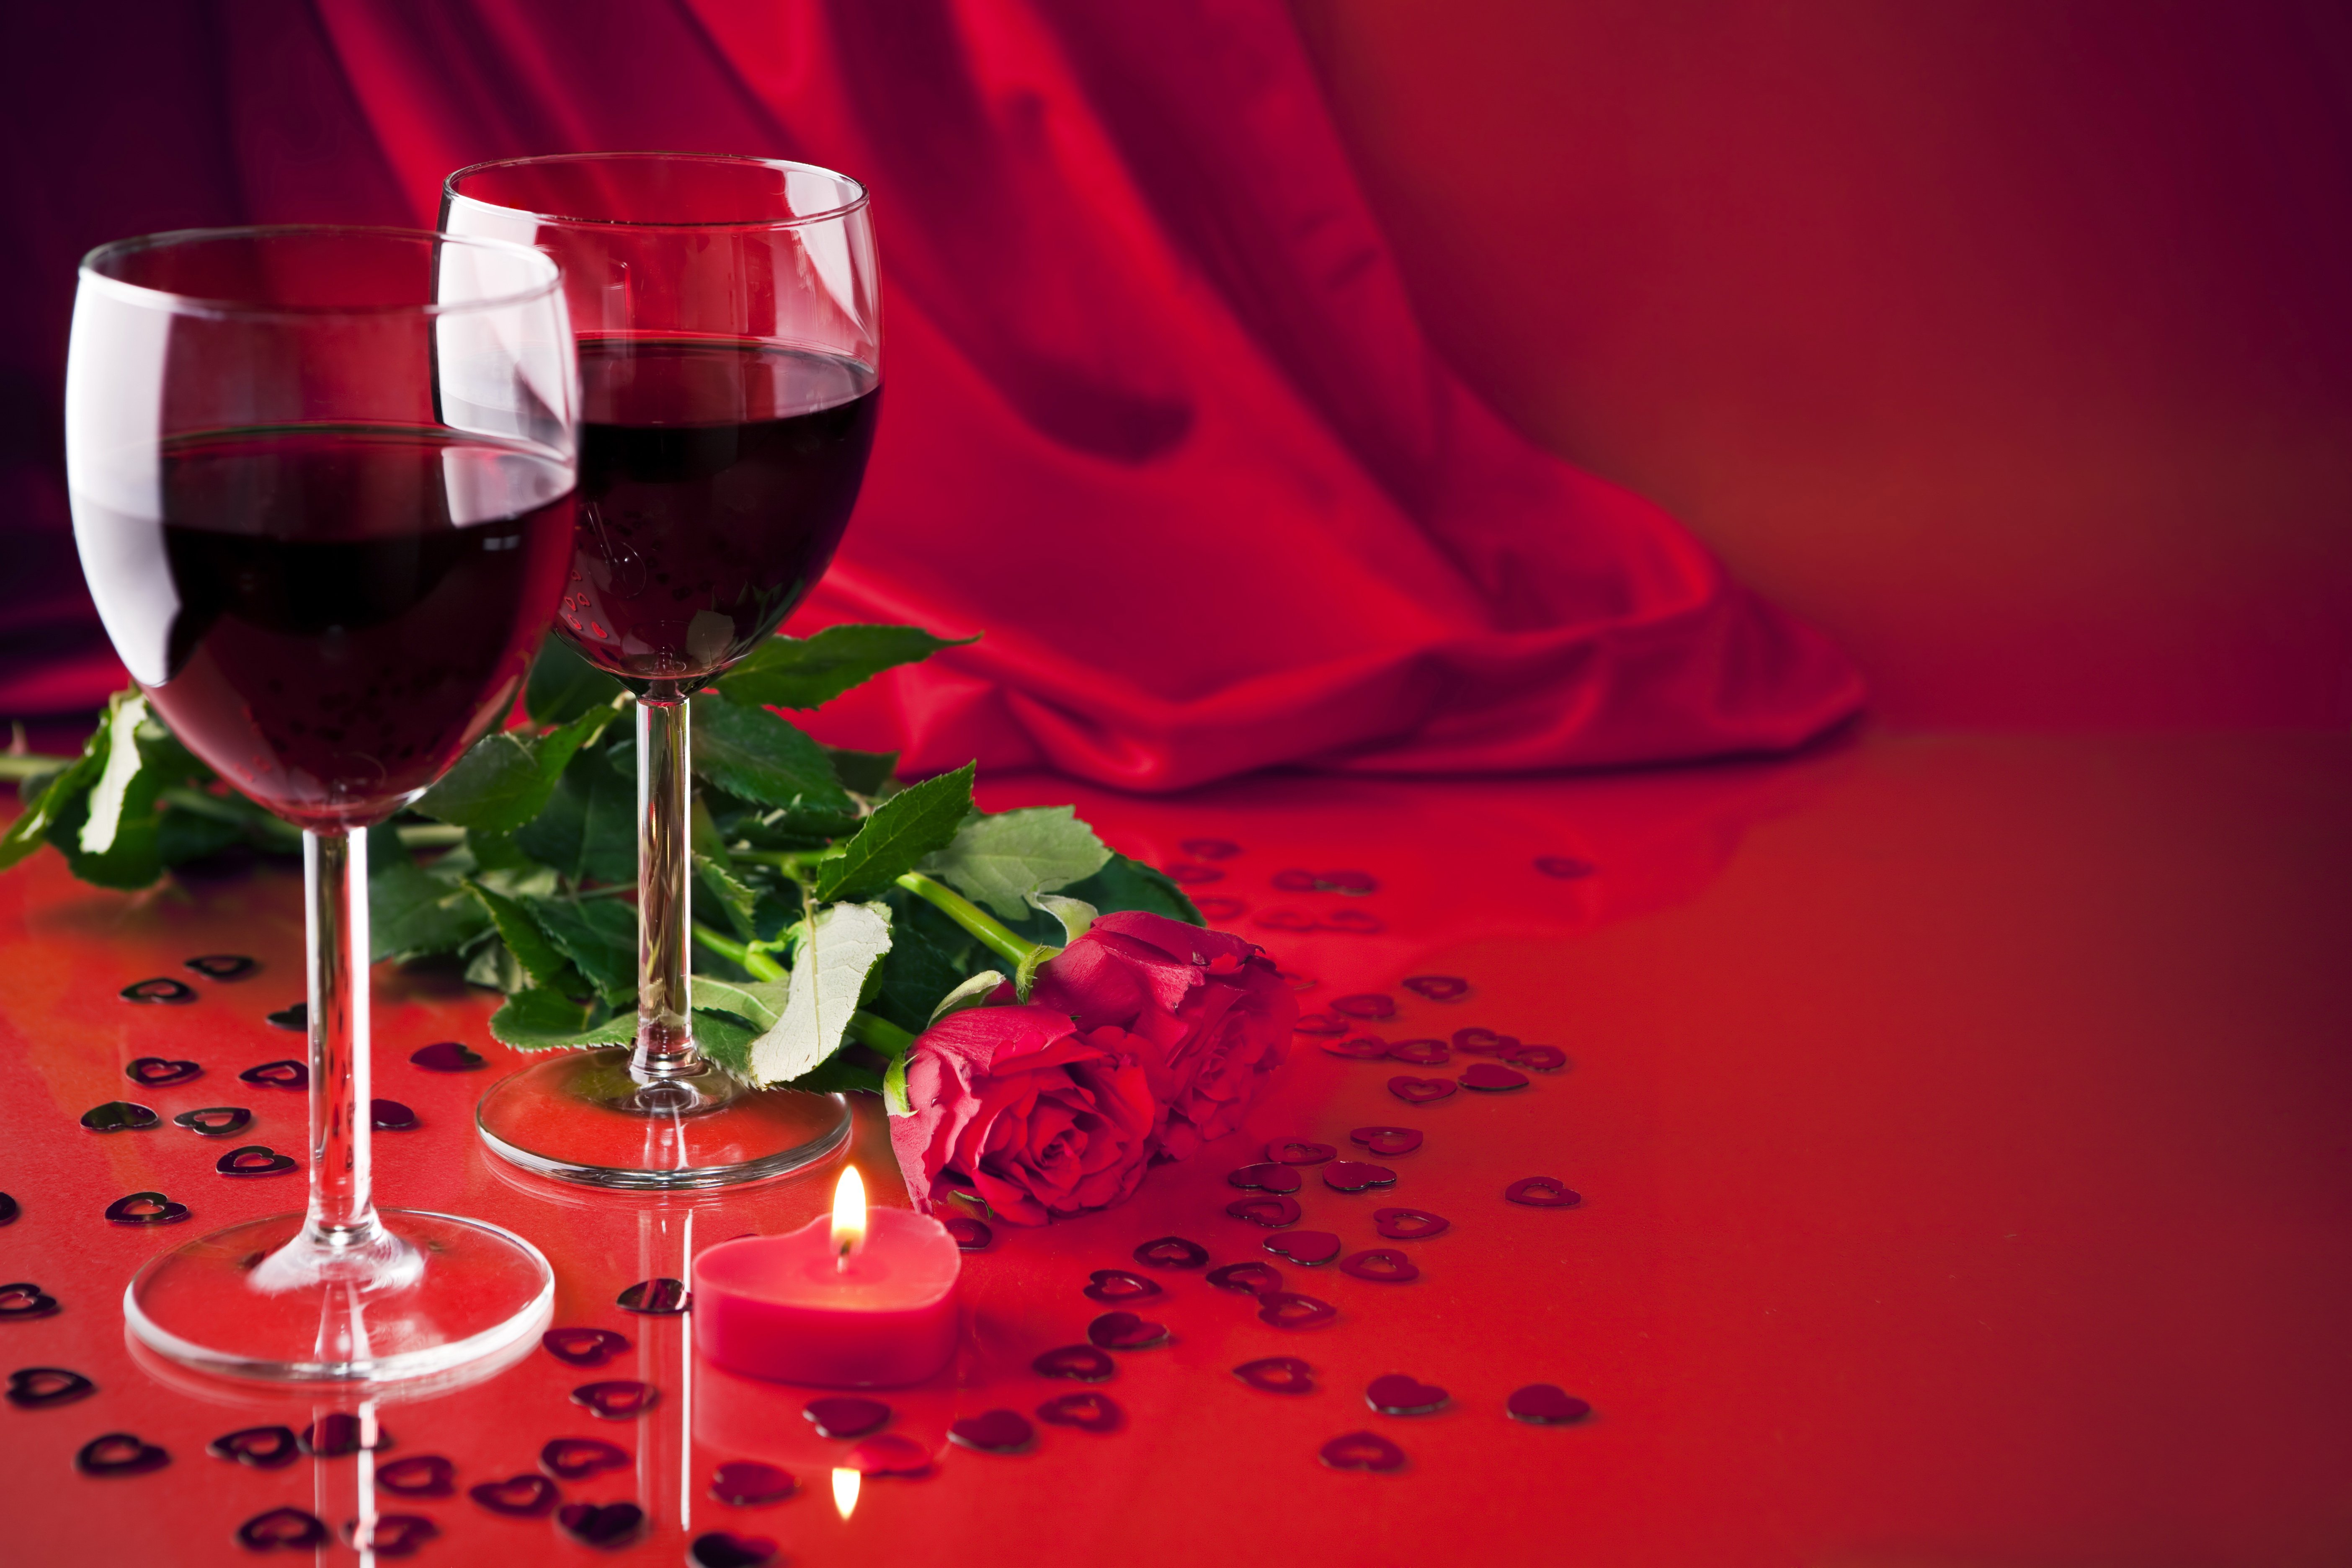 Роз вин. Романтический вечер. Вино и цветы. Романтические цветы. Романтичный вечер.